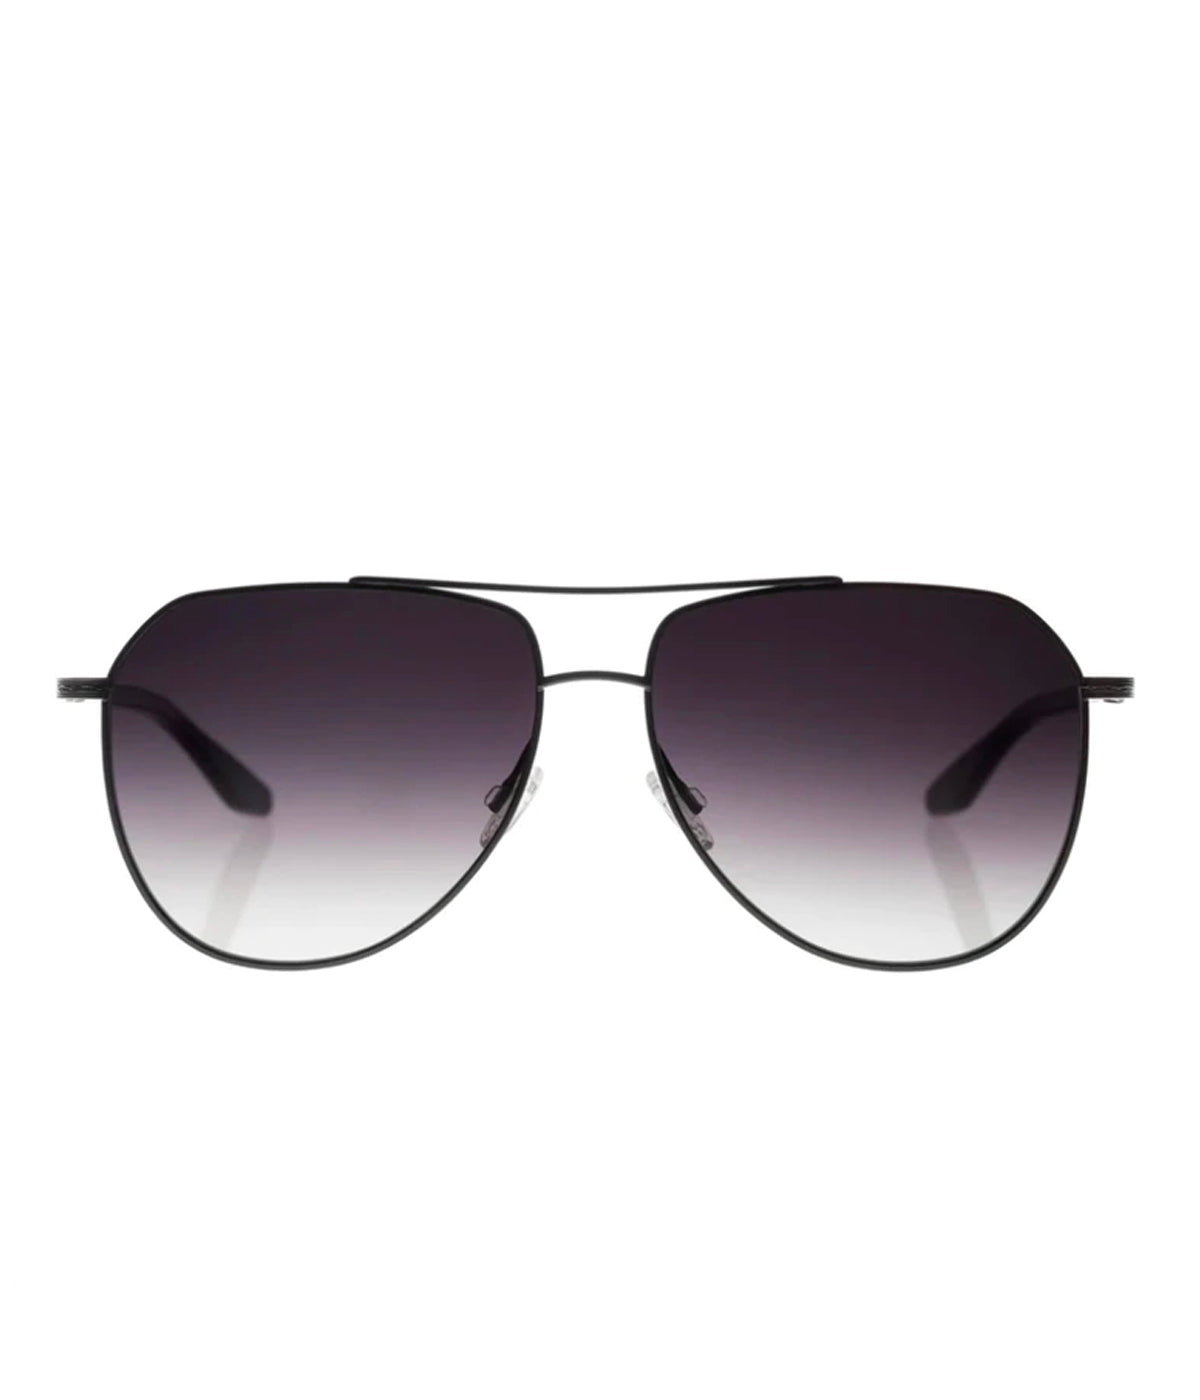 Voltaire Sunglasses in Black Grey